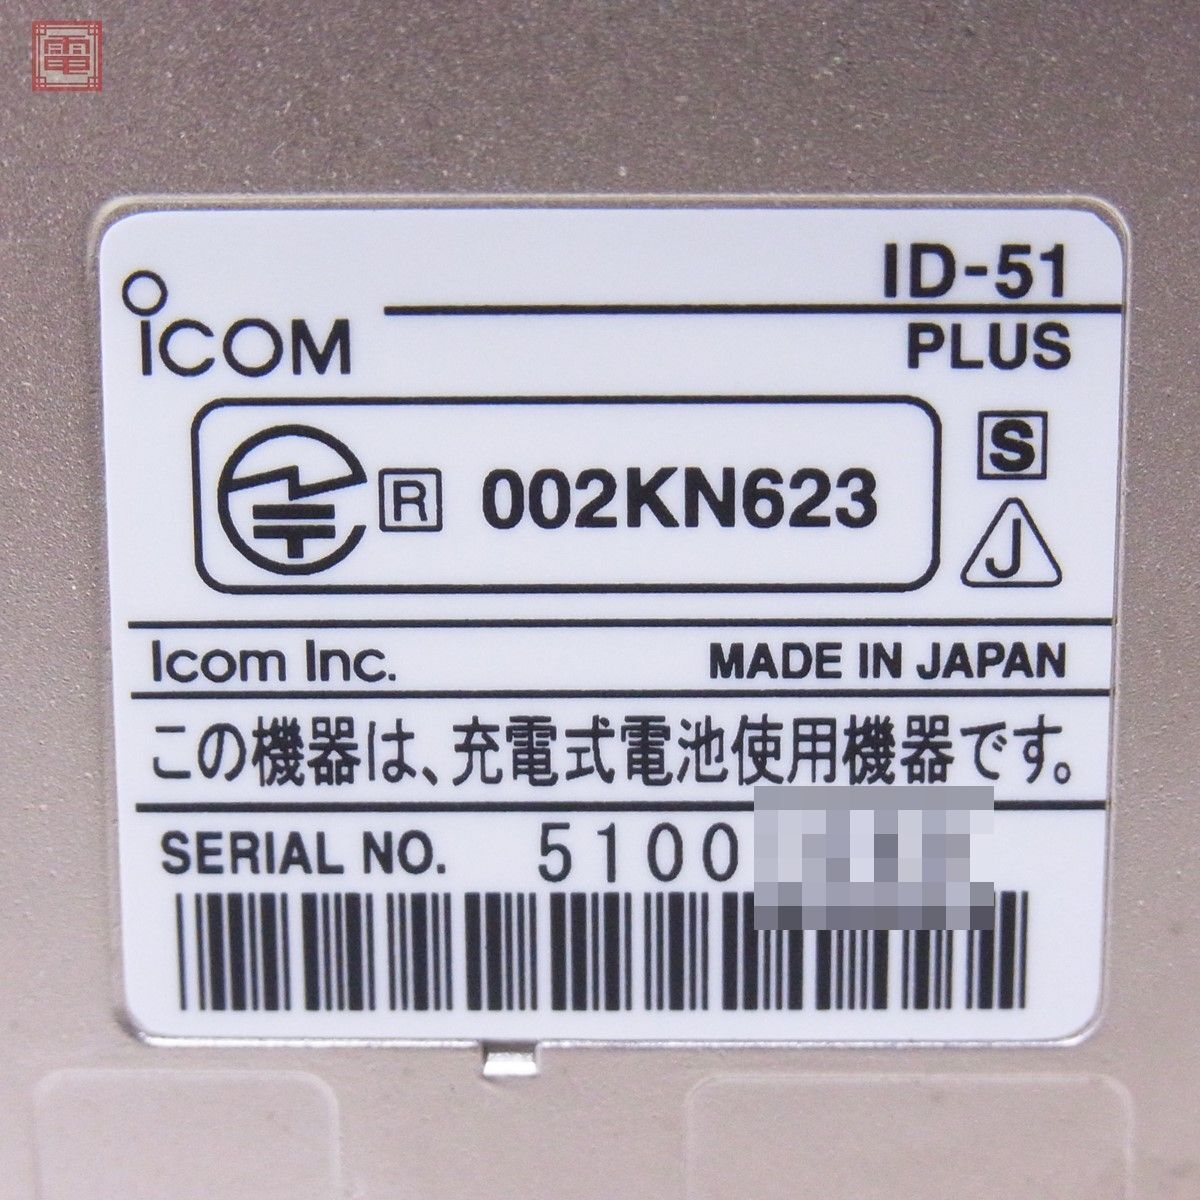  Icom ID-51PLUS 50 anniversary commemoration model 144/430MHz handy transceiver ICOM[10